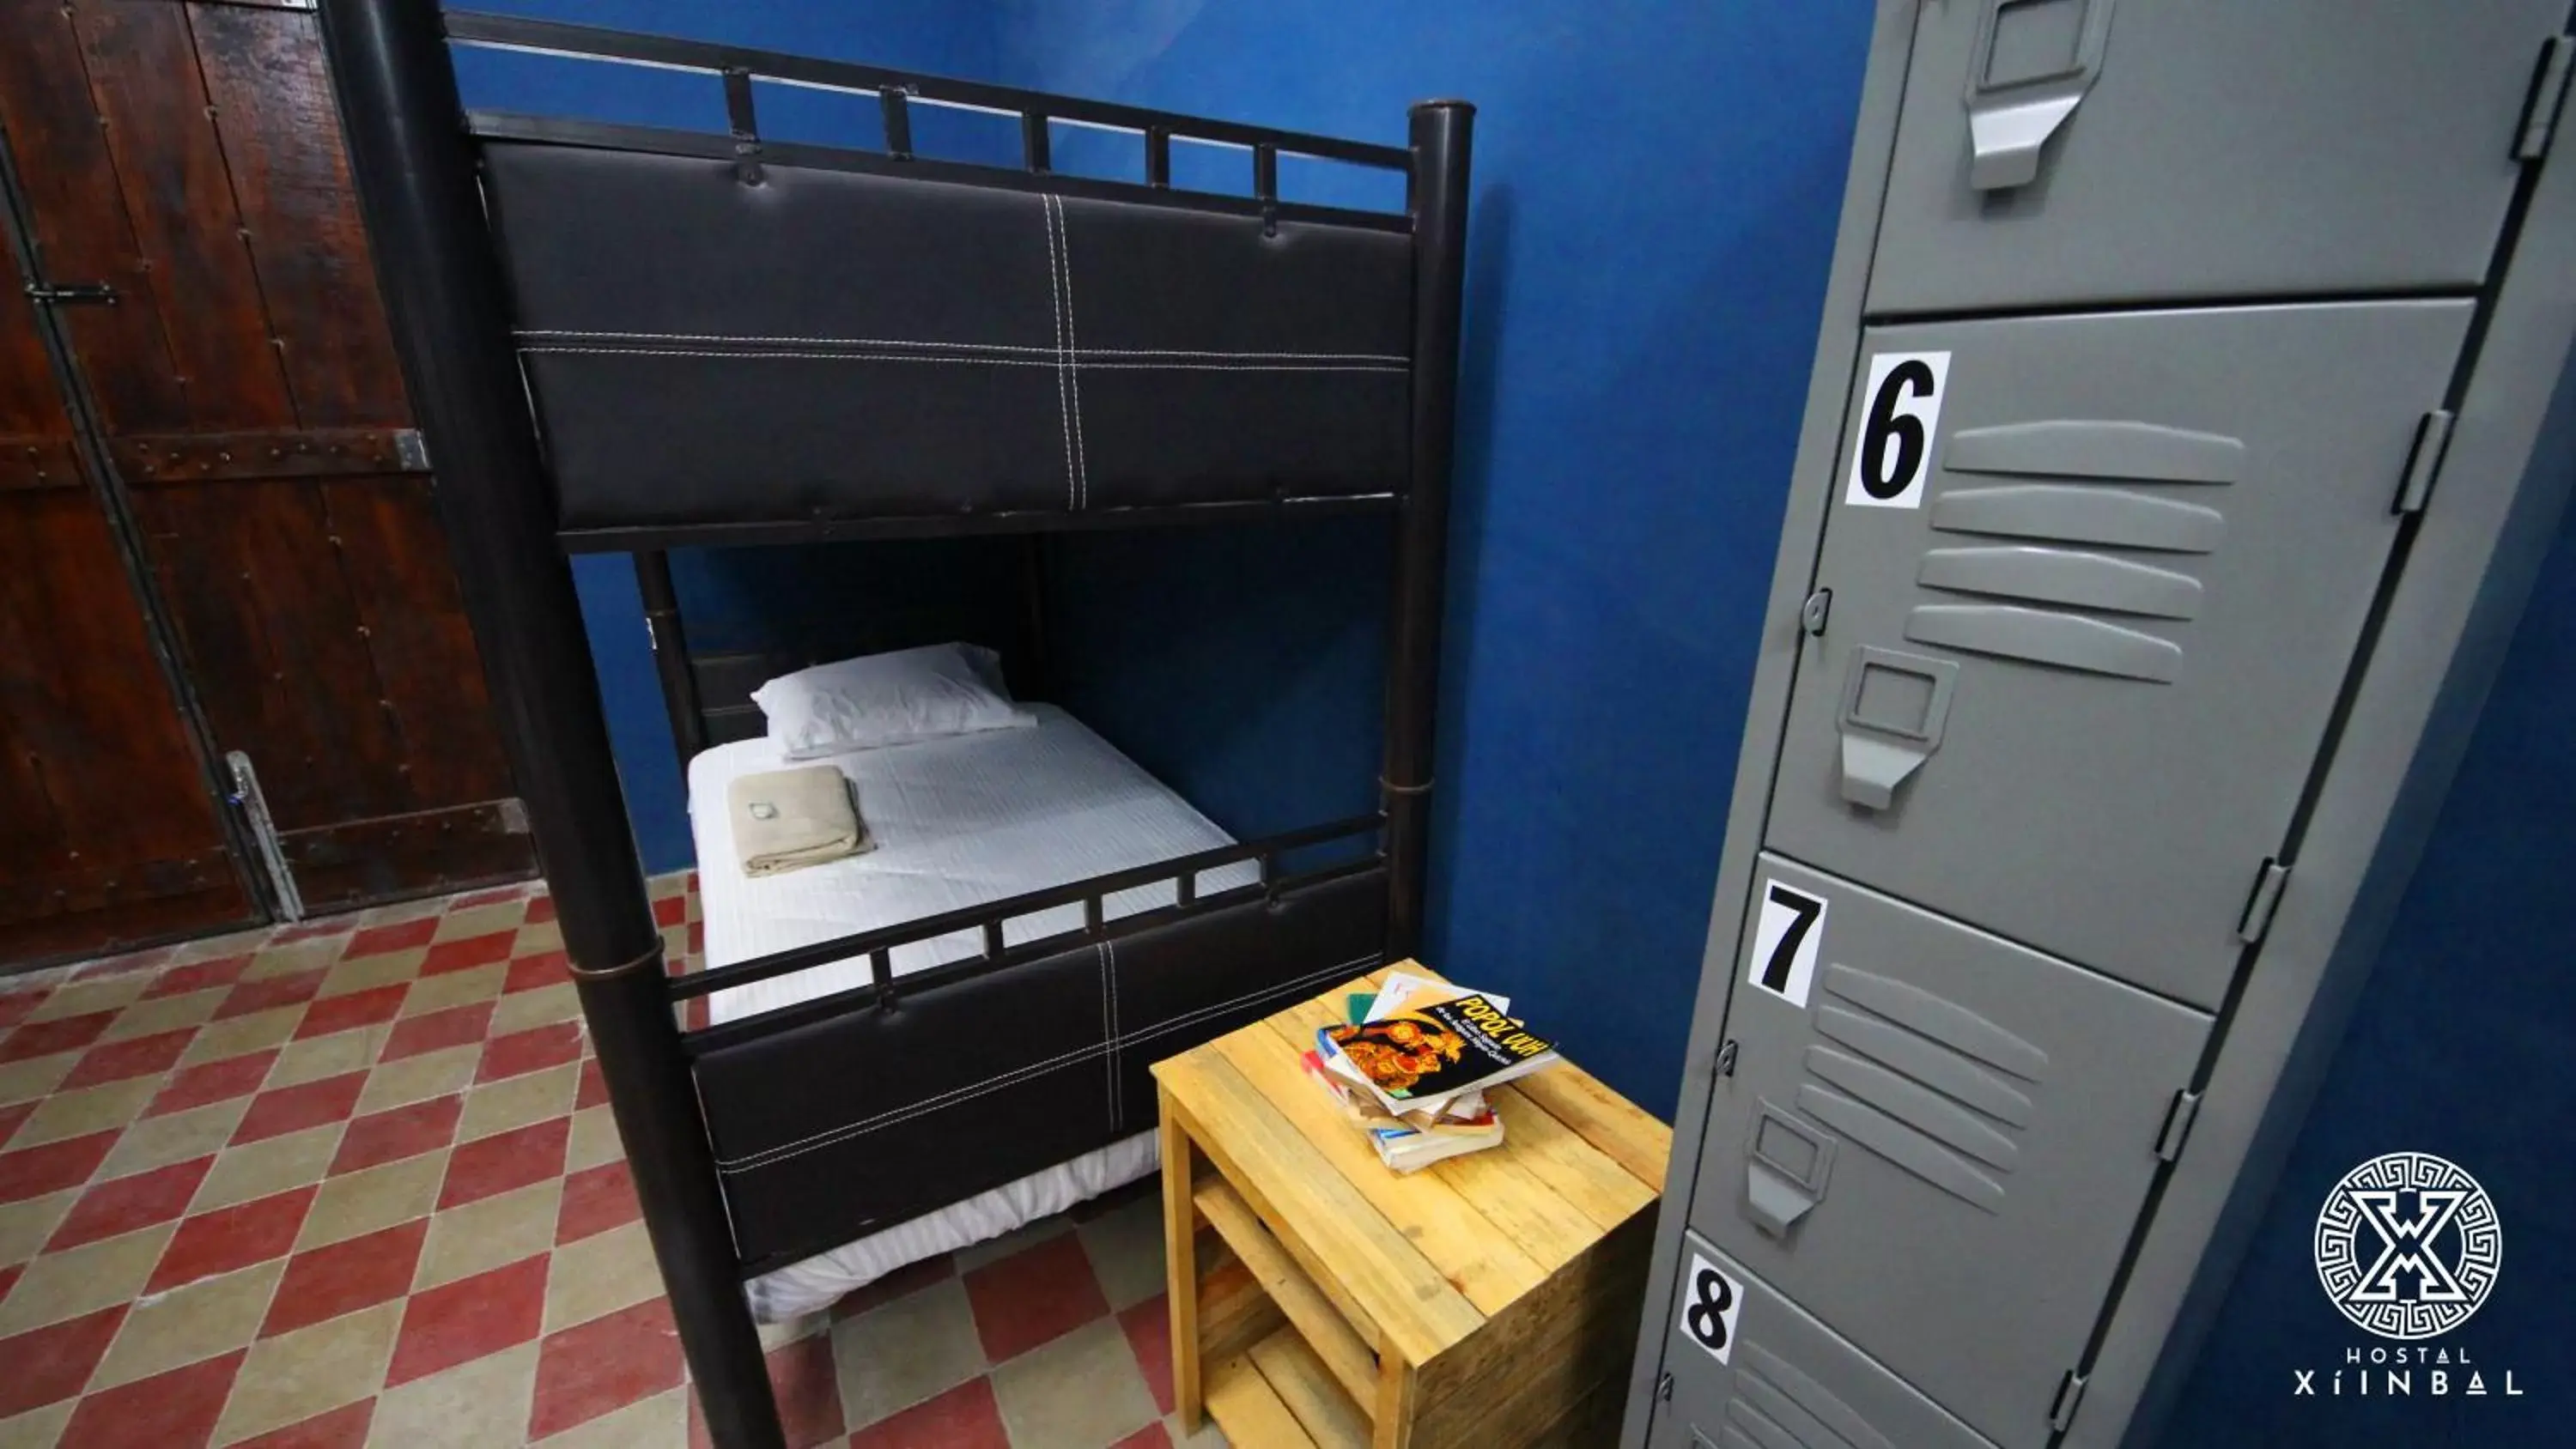 Bunk Bed in Hostal Xiinbal